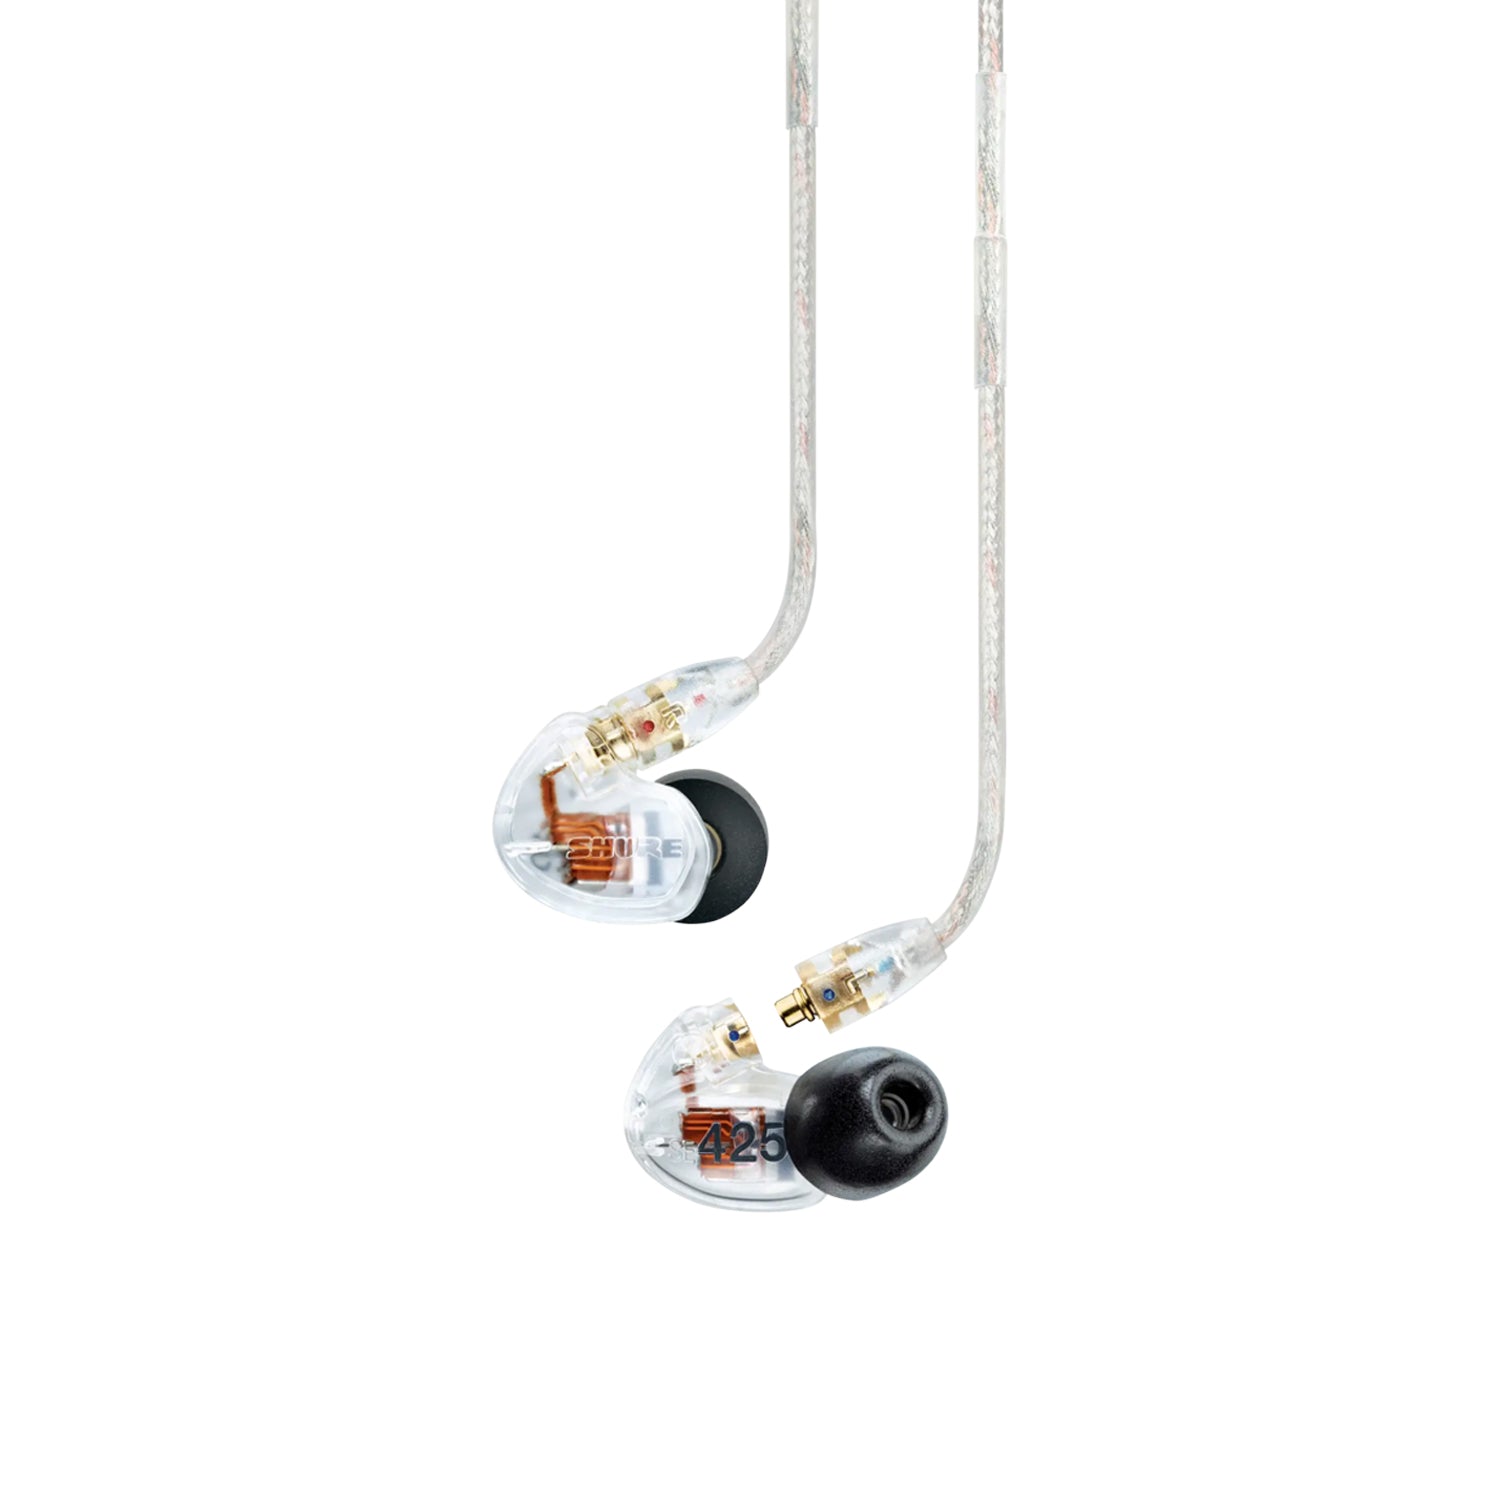 Shure SE425 Pro Sound Isolating Earphones